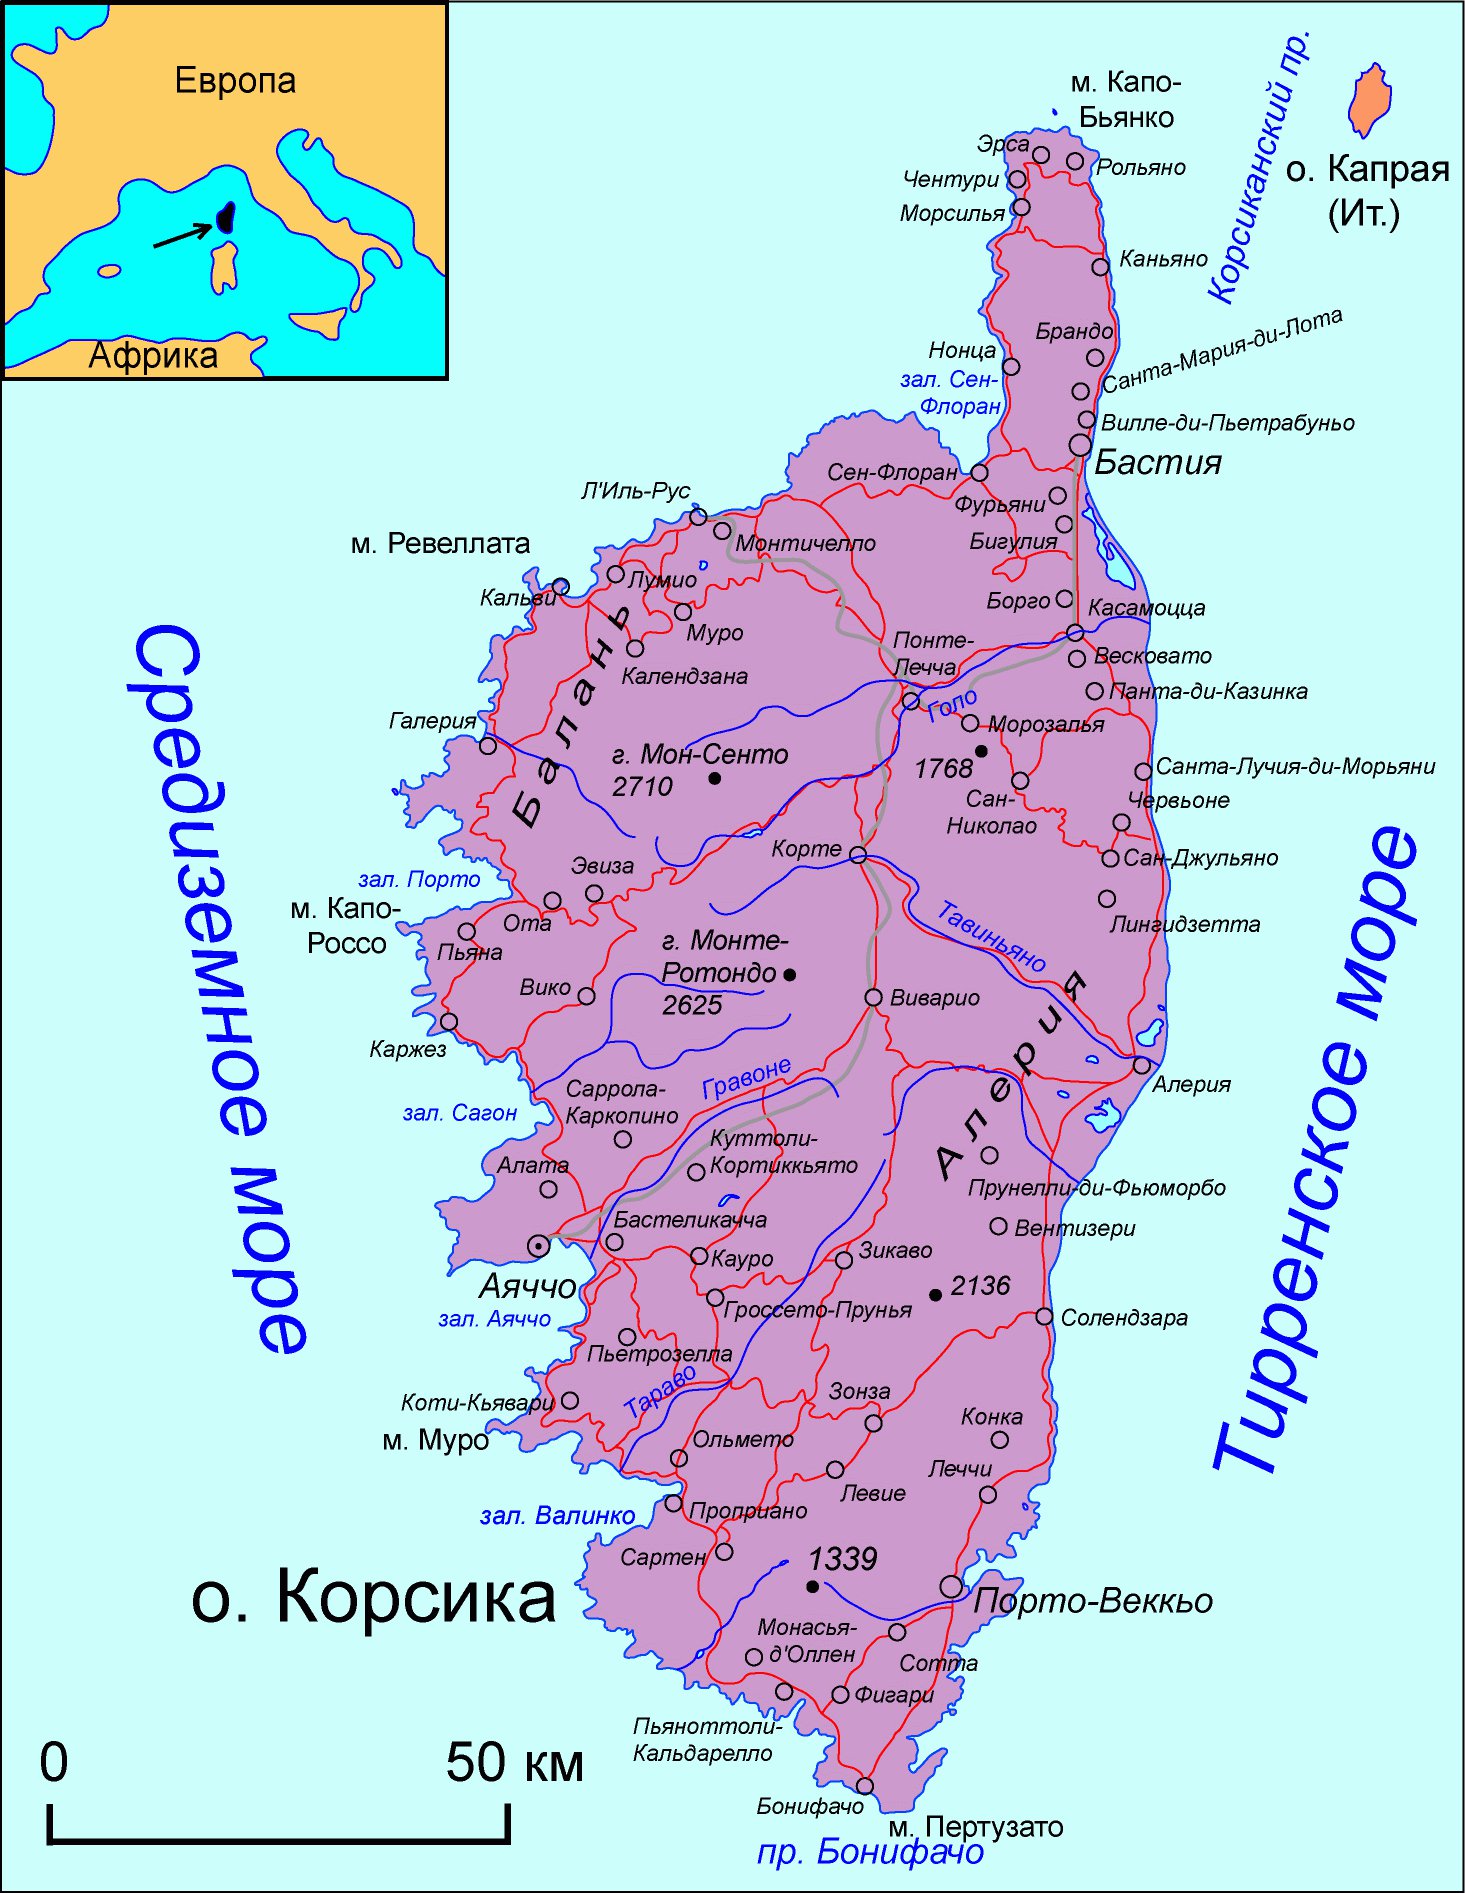 Corse map